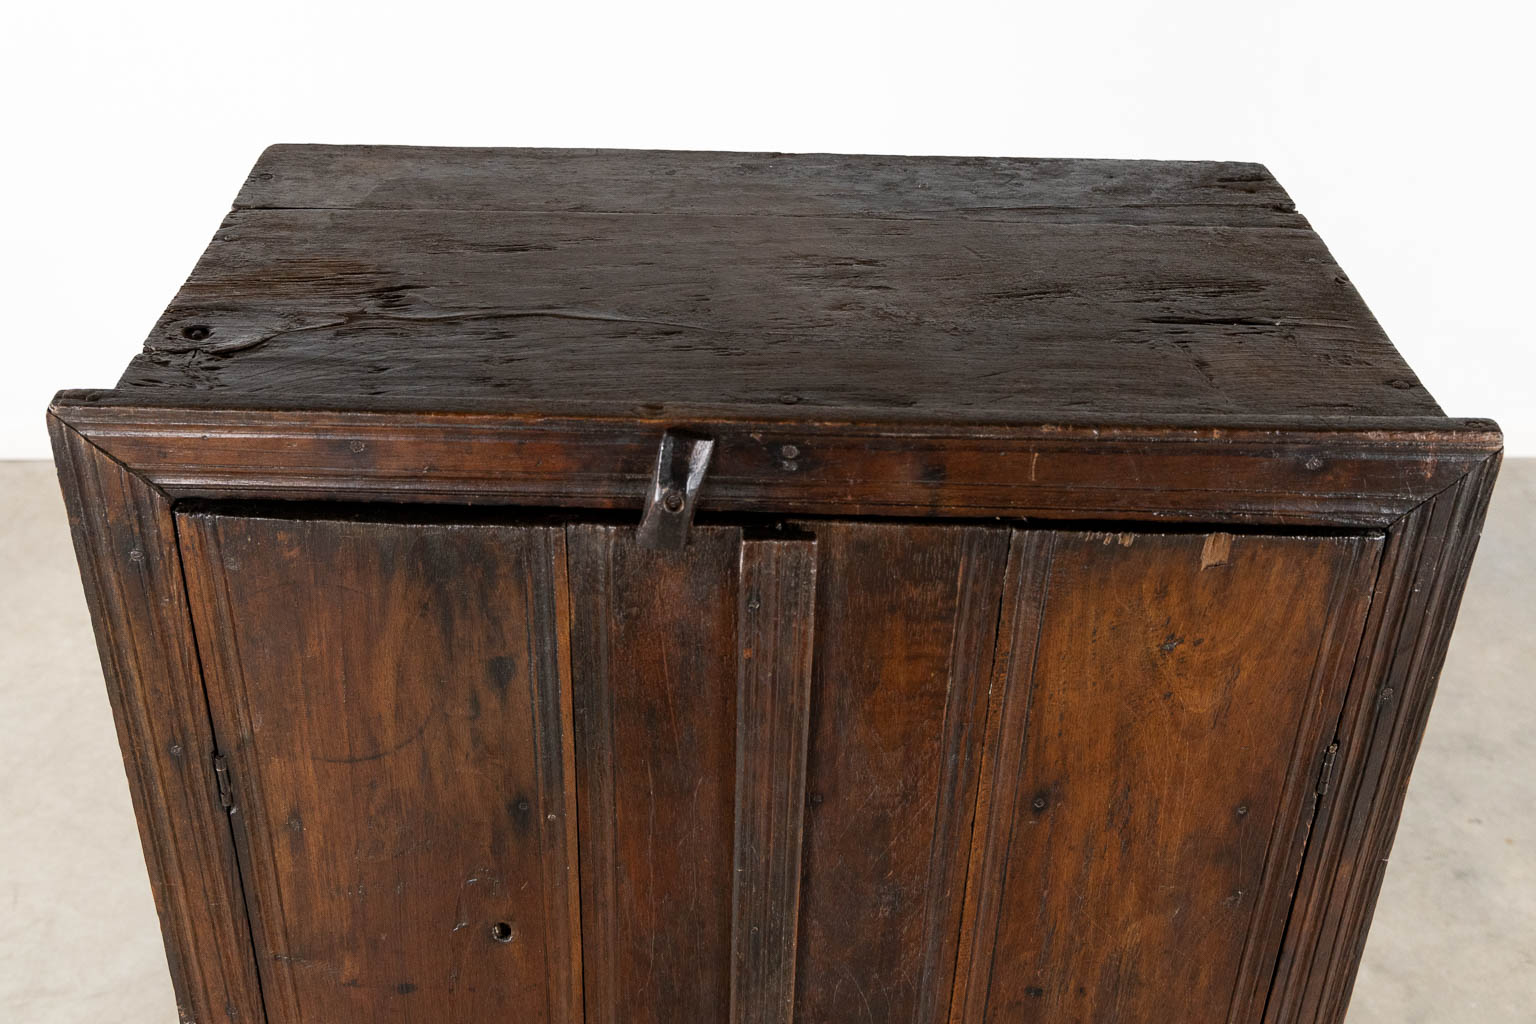 An antique two-door cabinet, hardwood. (L:36 x W:64 x H:143 cm)